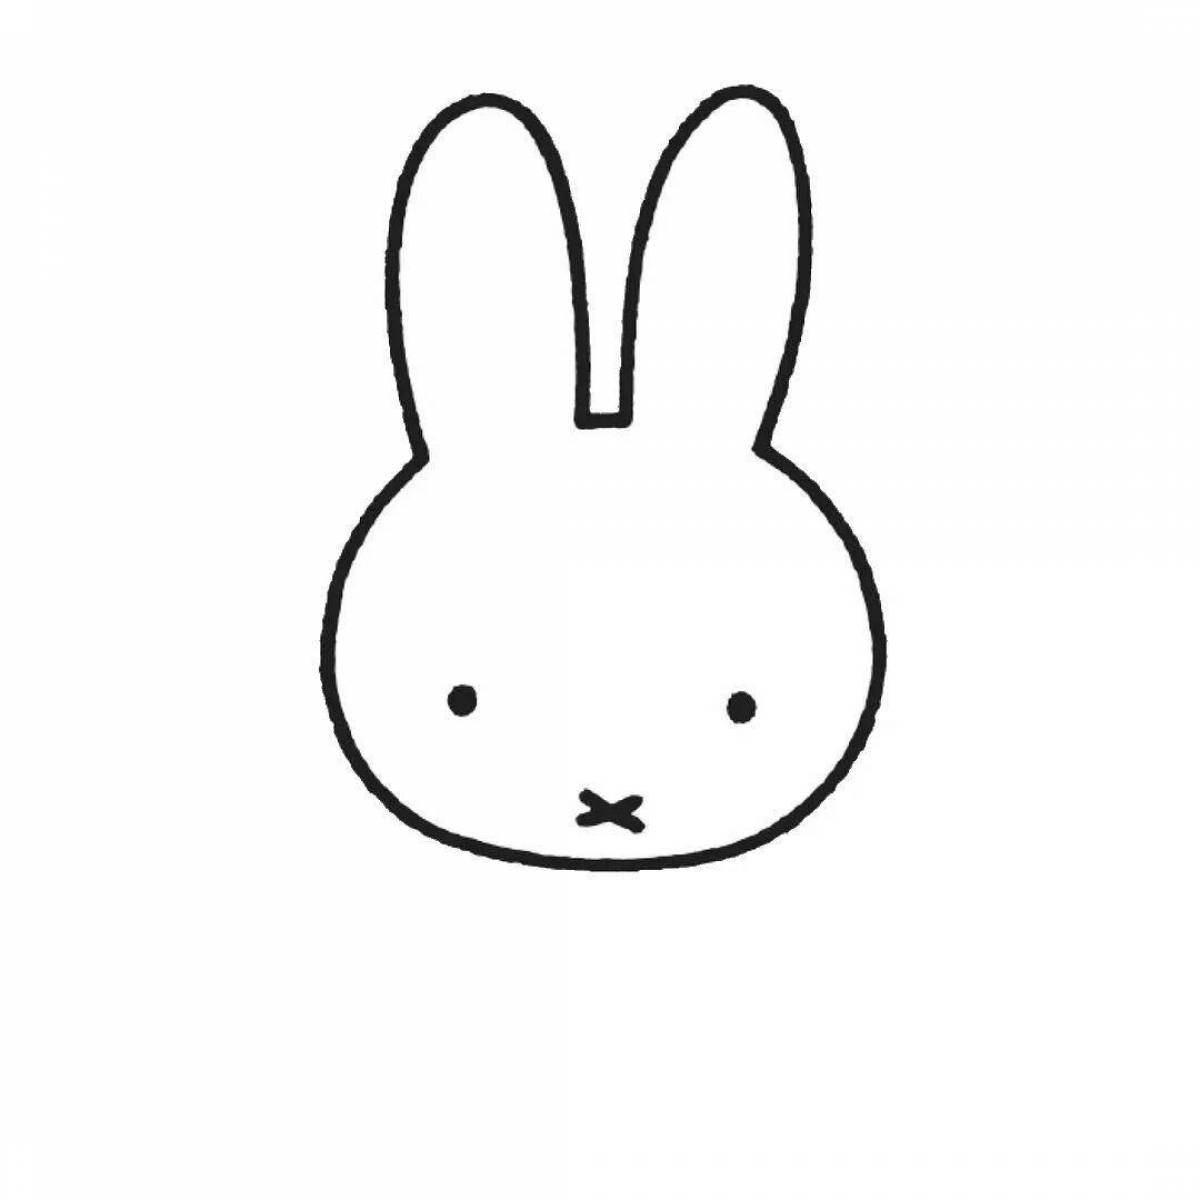 Adorable hare face coloring book